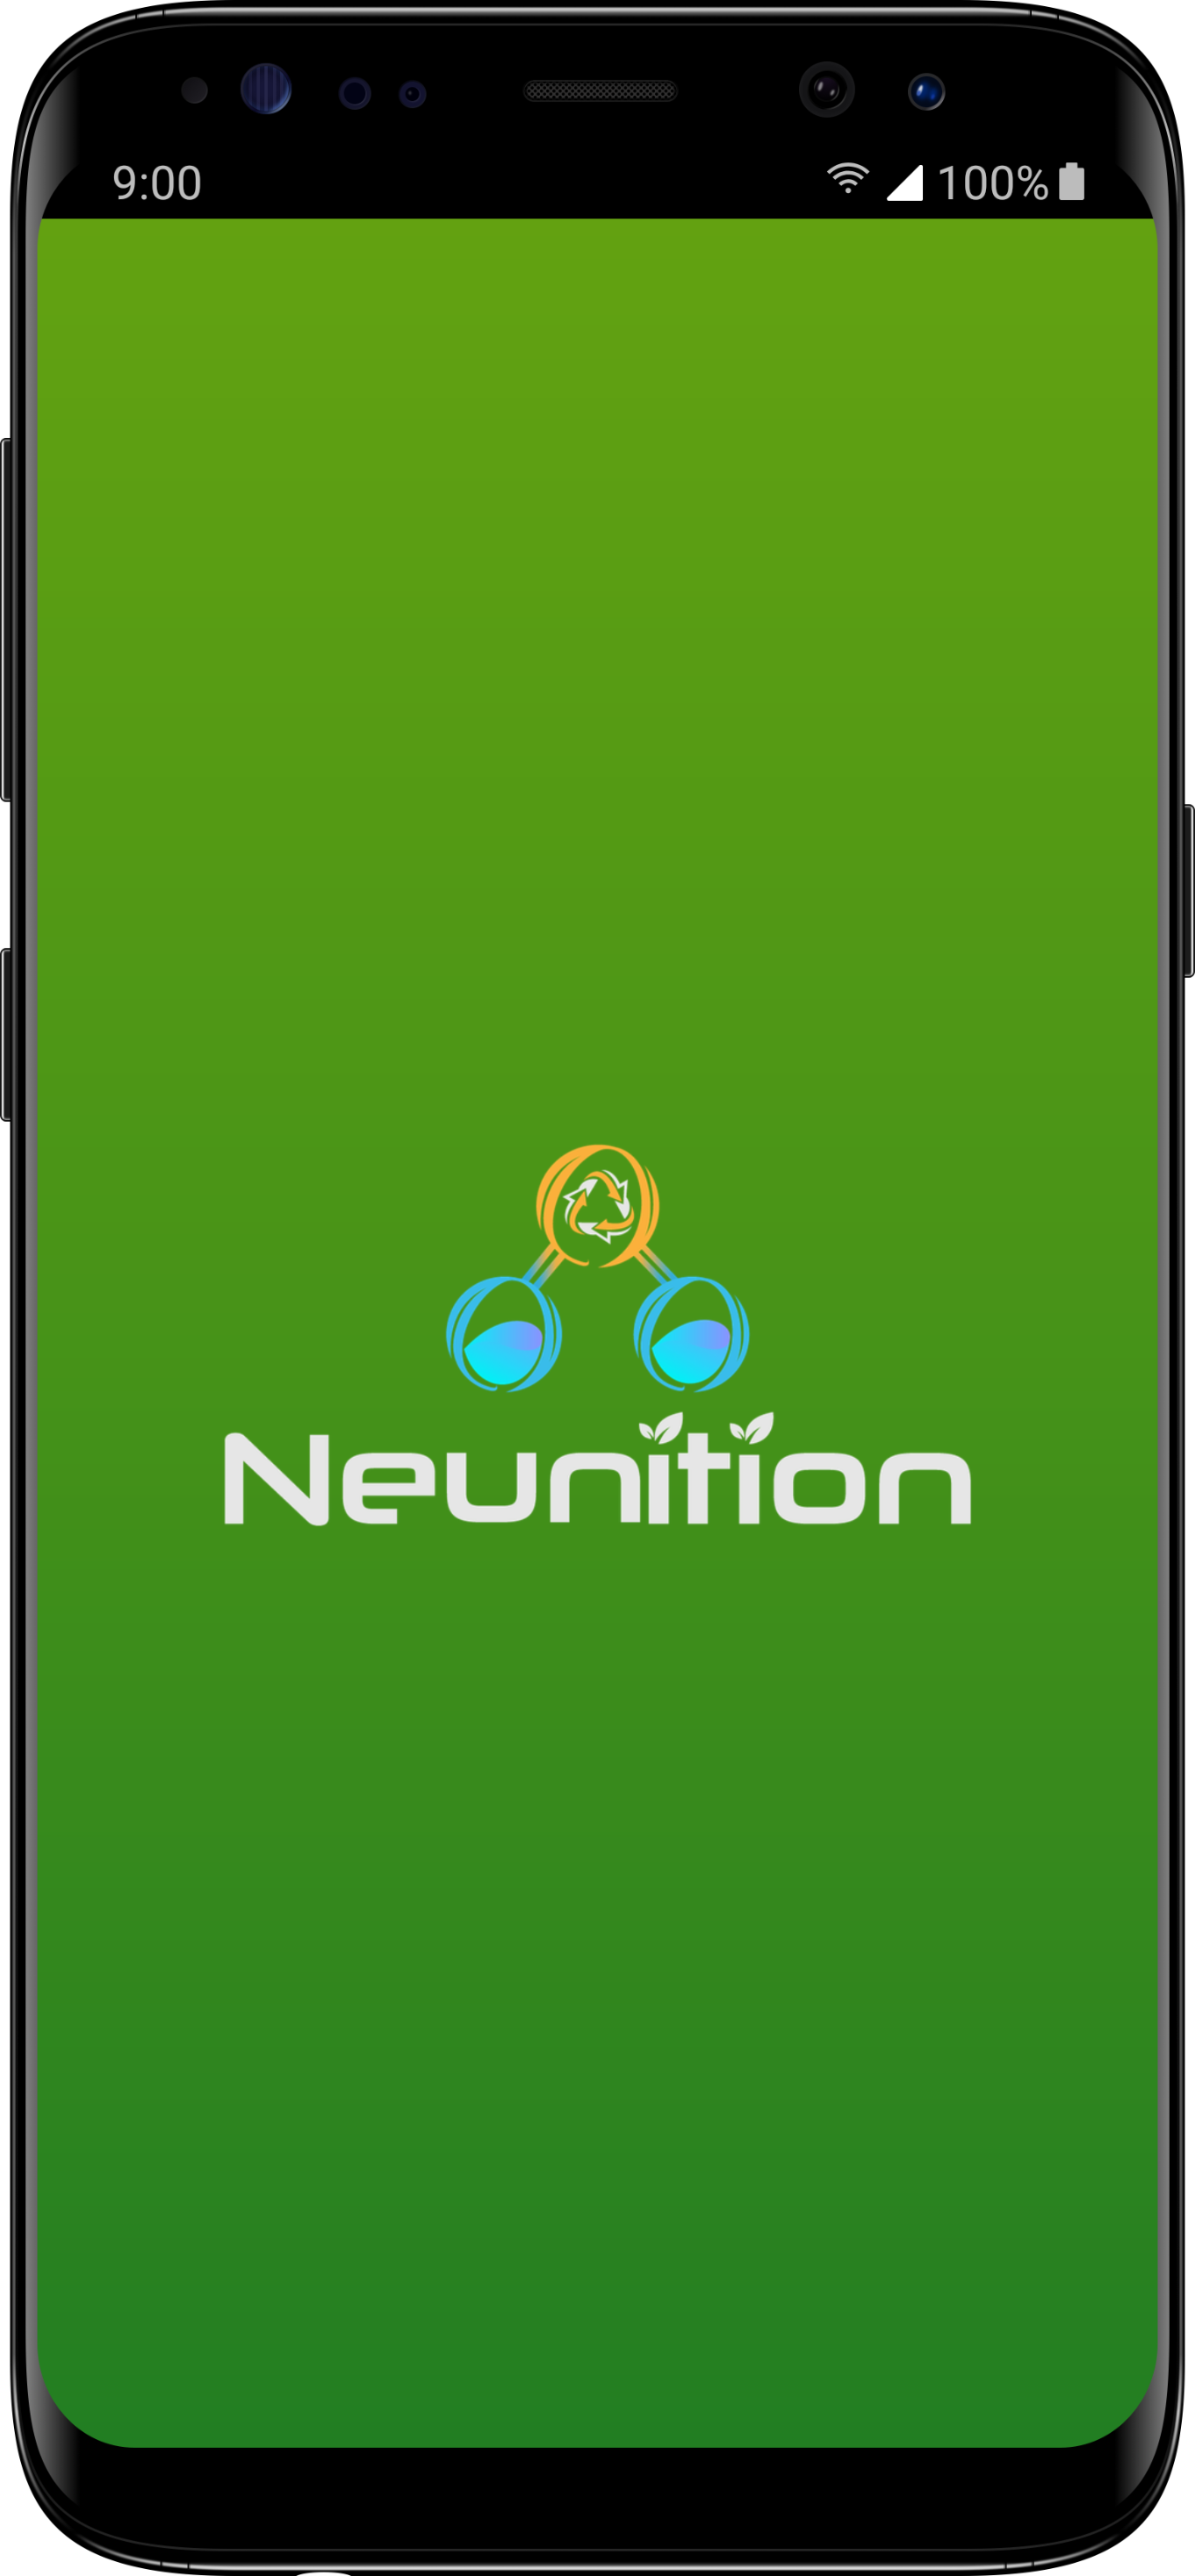 Neunition's splash screen